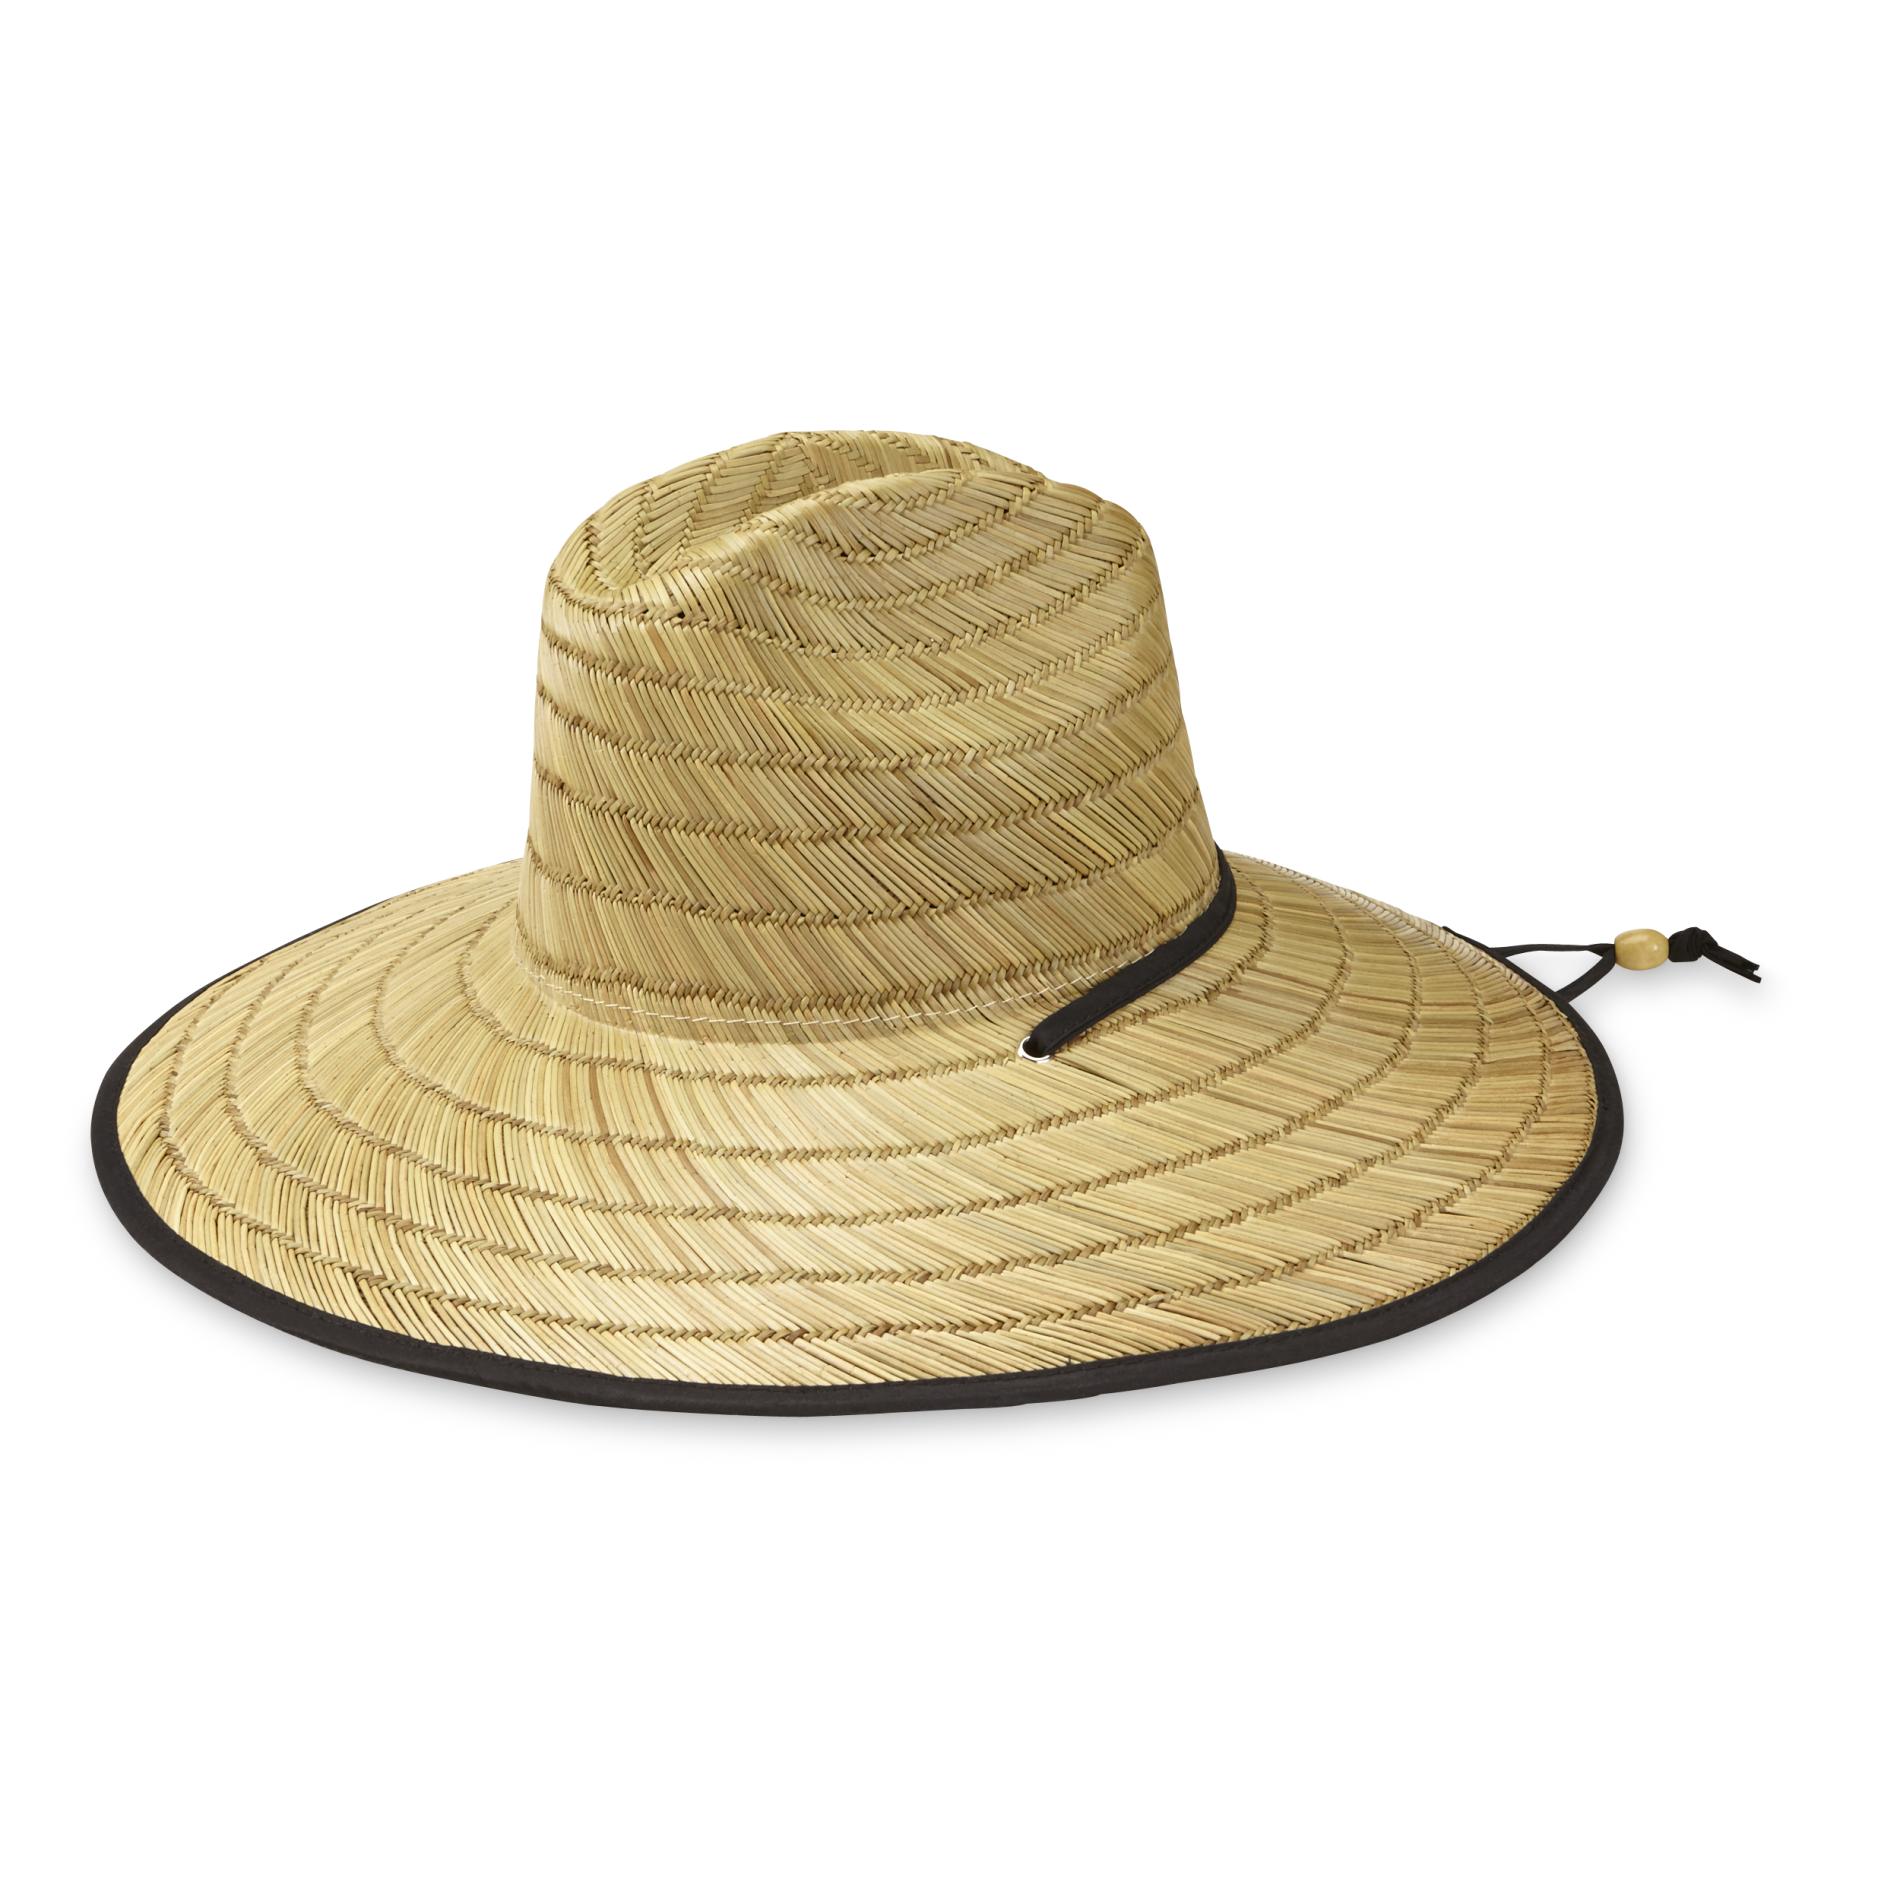 Realtree Men's Straw Hat